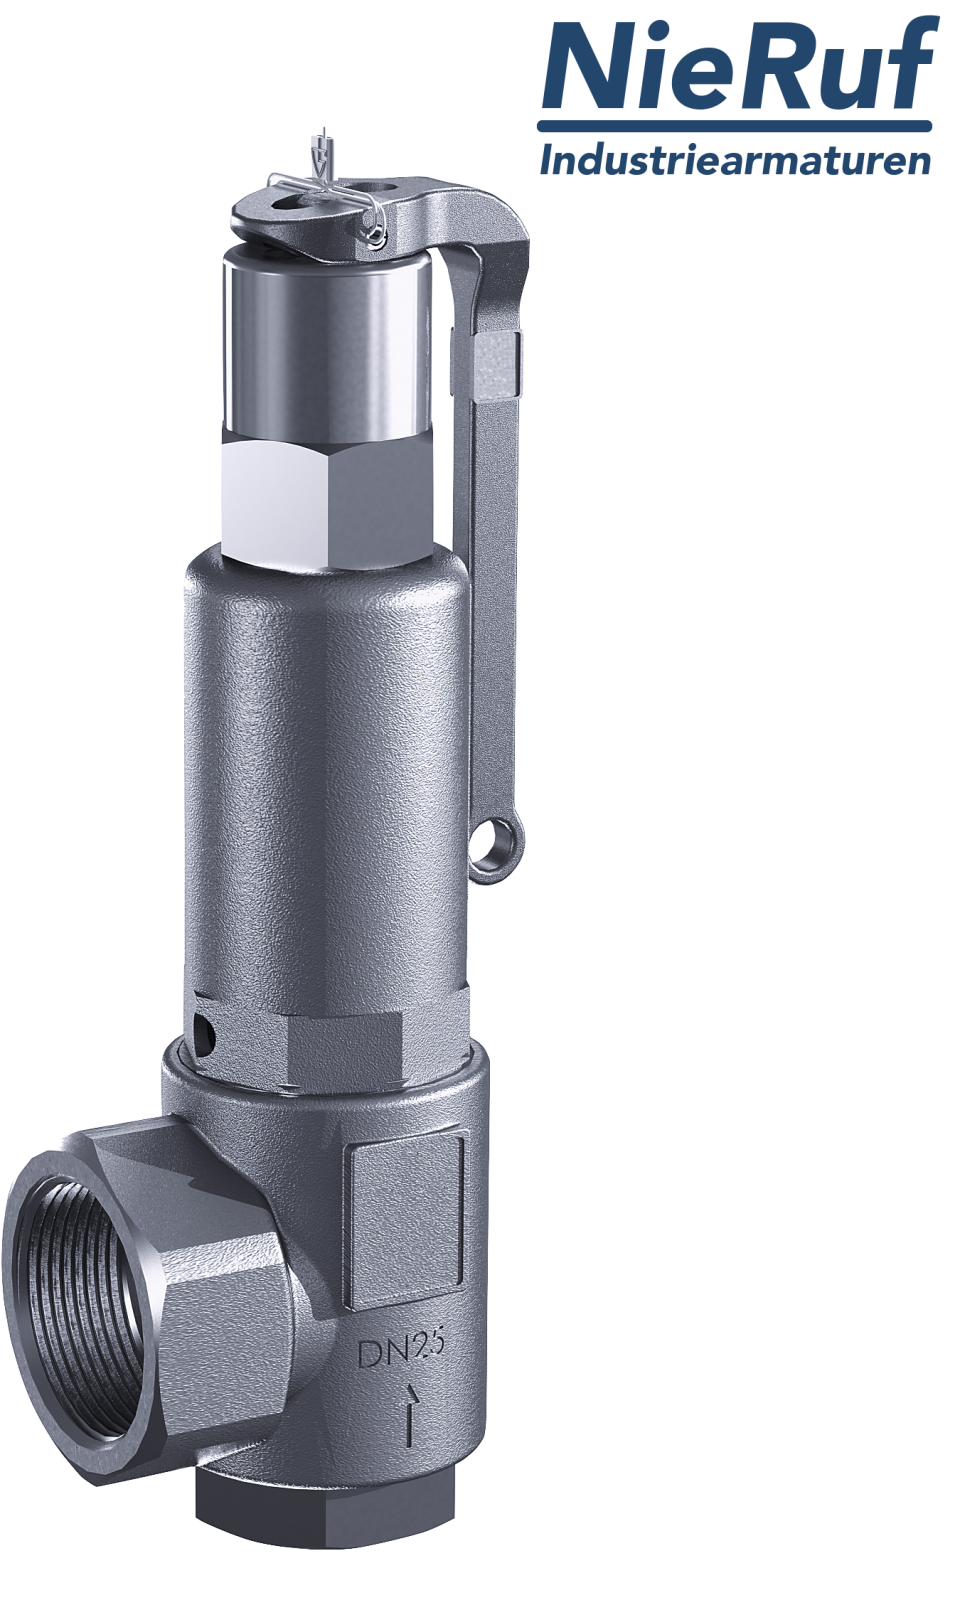 safety valve 1" x 1 1/2" fm SV05 neutral liquid media, stainless steel FKM, with lever